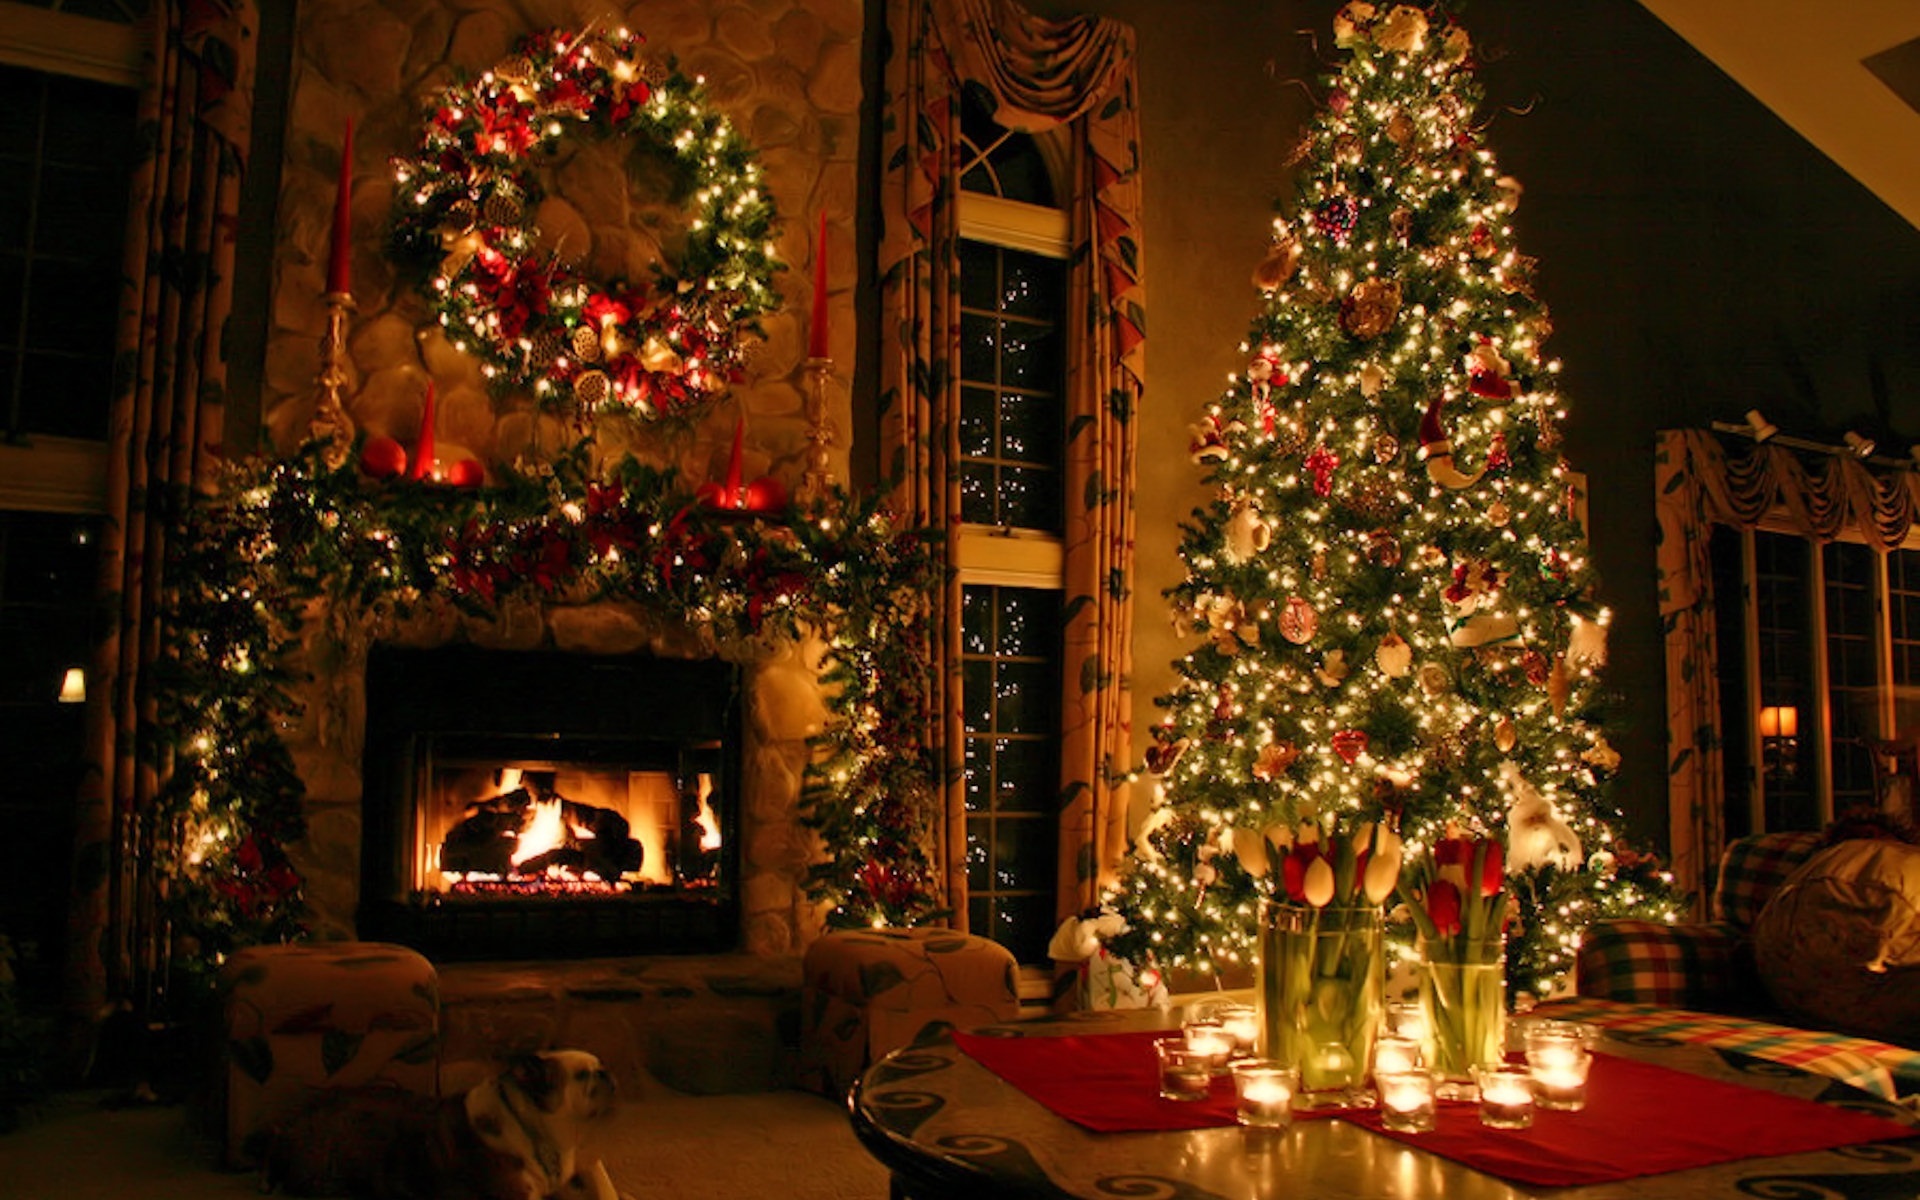 Fir Tree Room Wreath Christmas New Year Fireplace Holidays